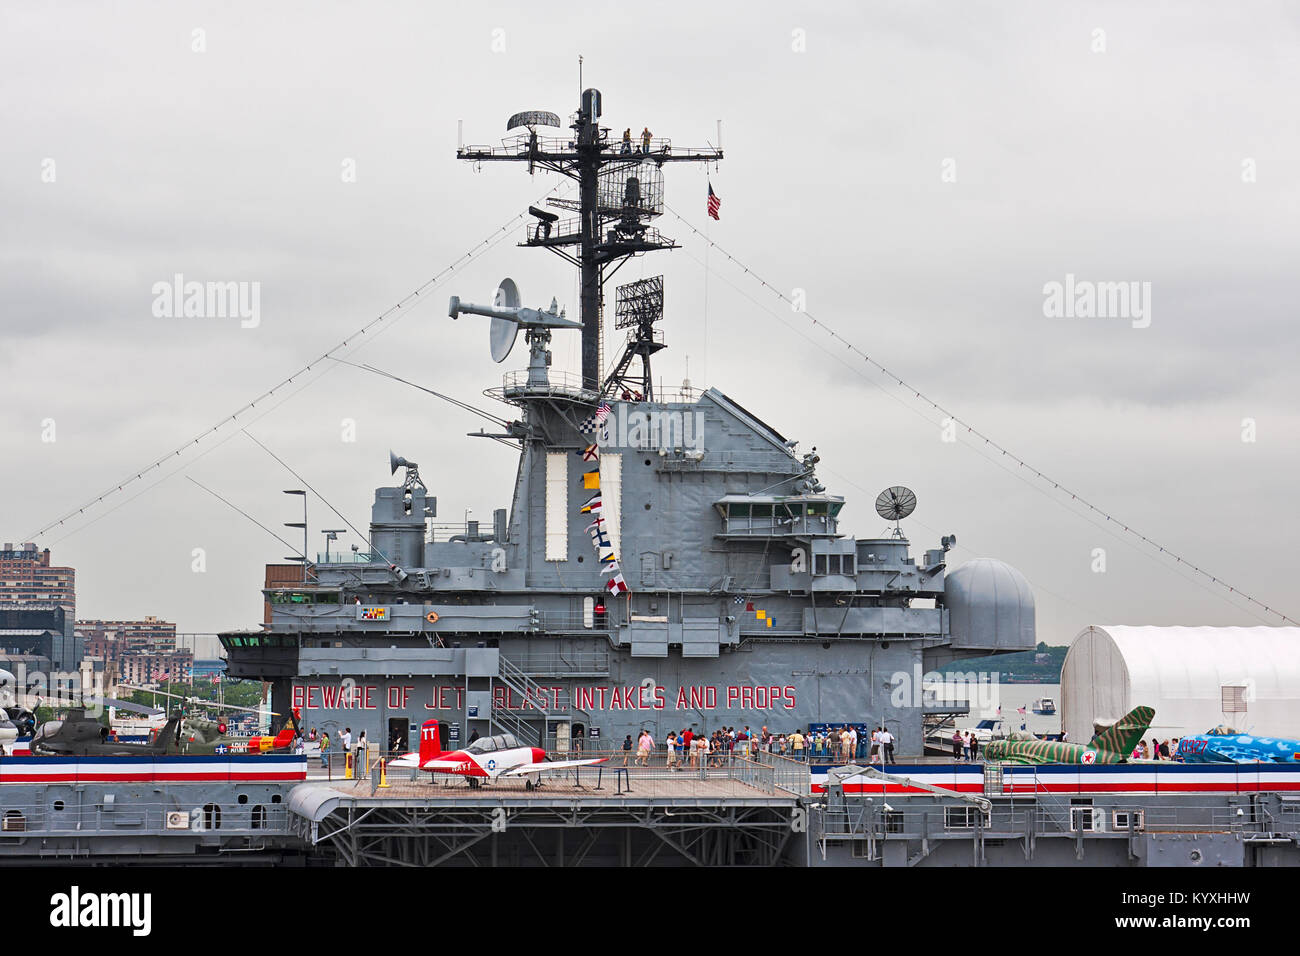 La USS Intrepid navy portaerei alla Intrepid Sea-Air-Space Museum a Manhattan, New York City. Foto Stock